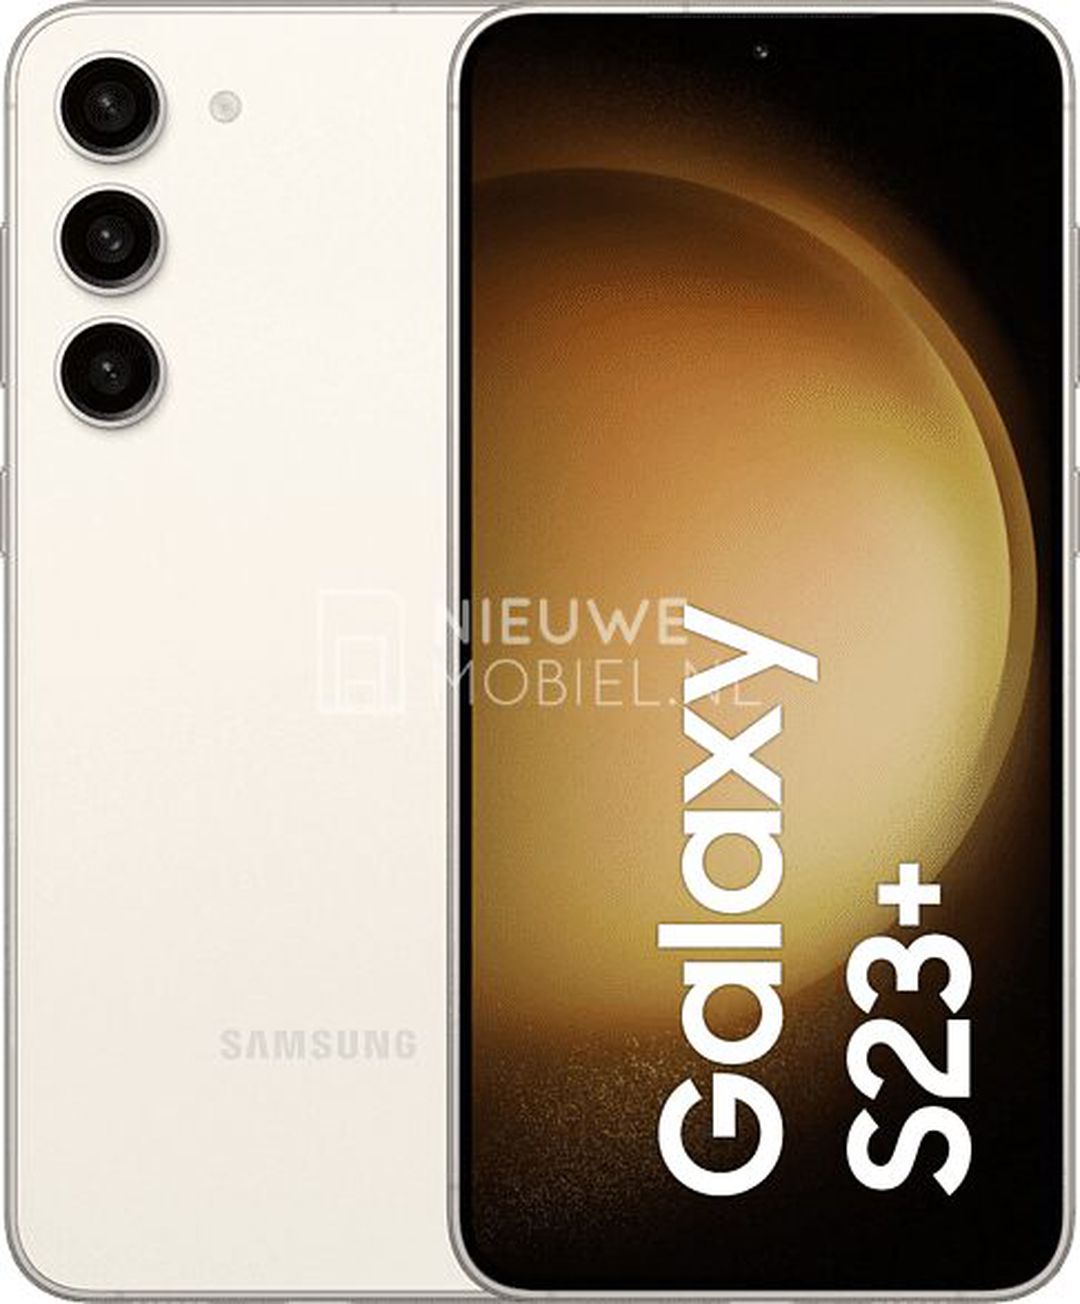 Samsung Galaxy S9 Plus Note 8